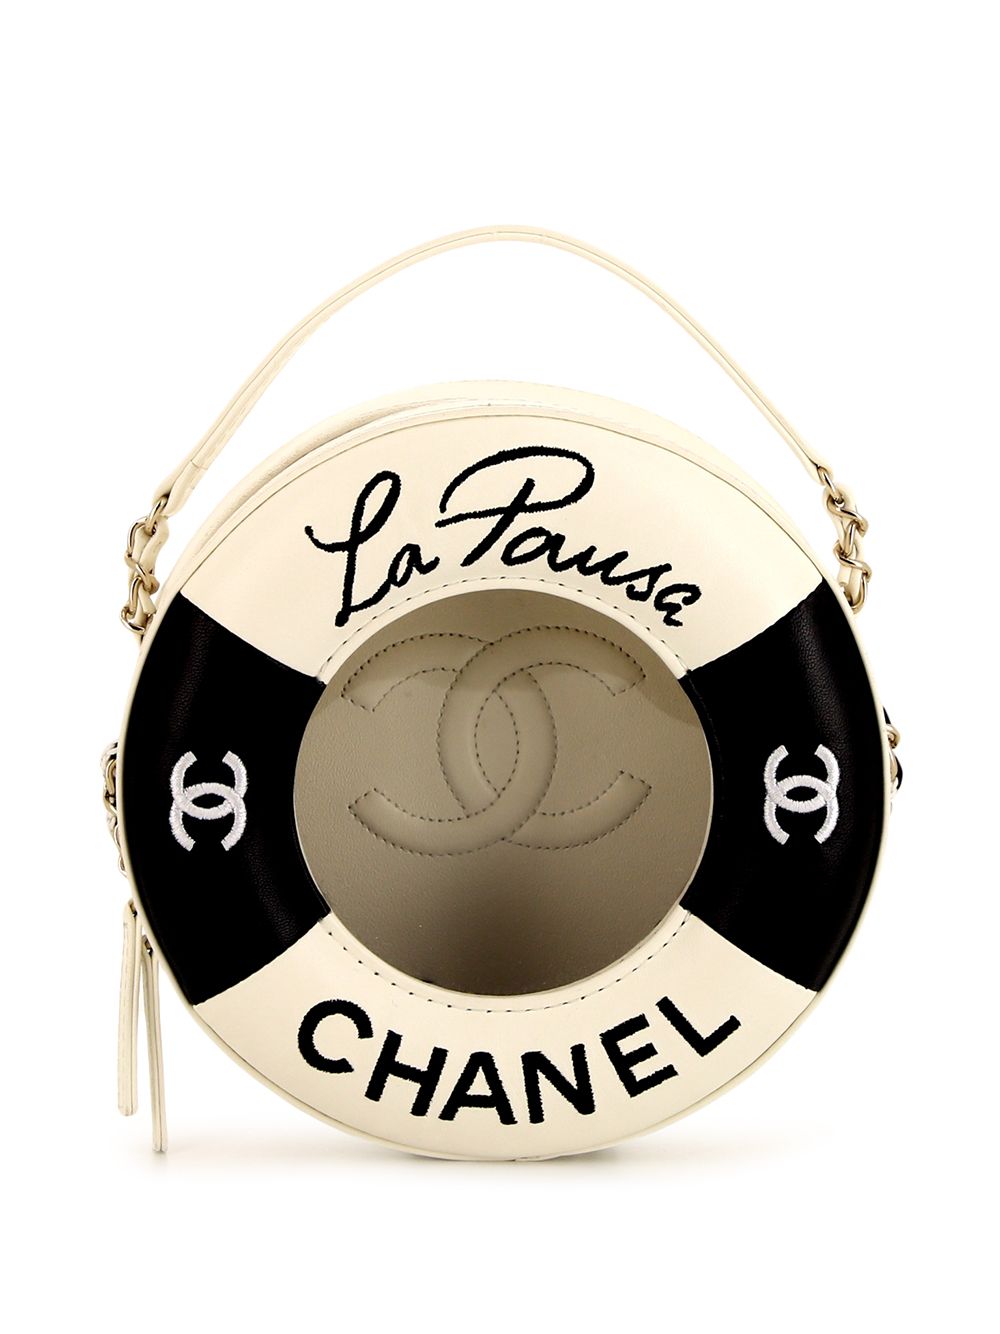 Chanel Pre-Owned
2019 Limited Edition La Pausa shoulder bag